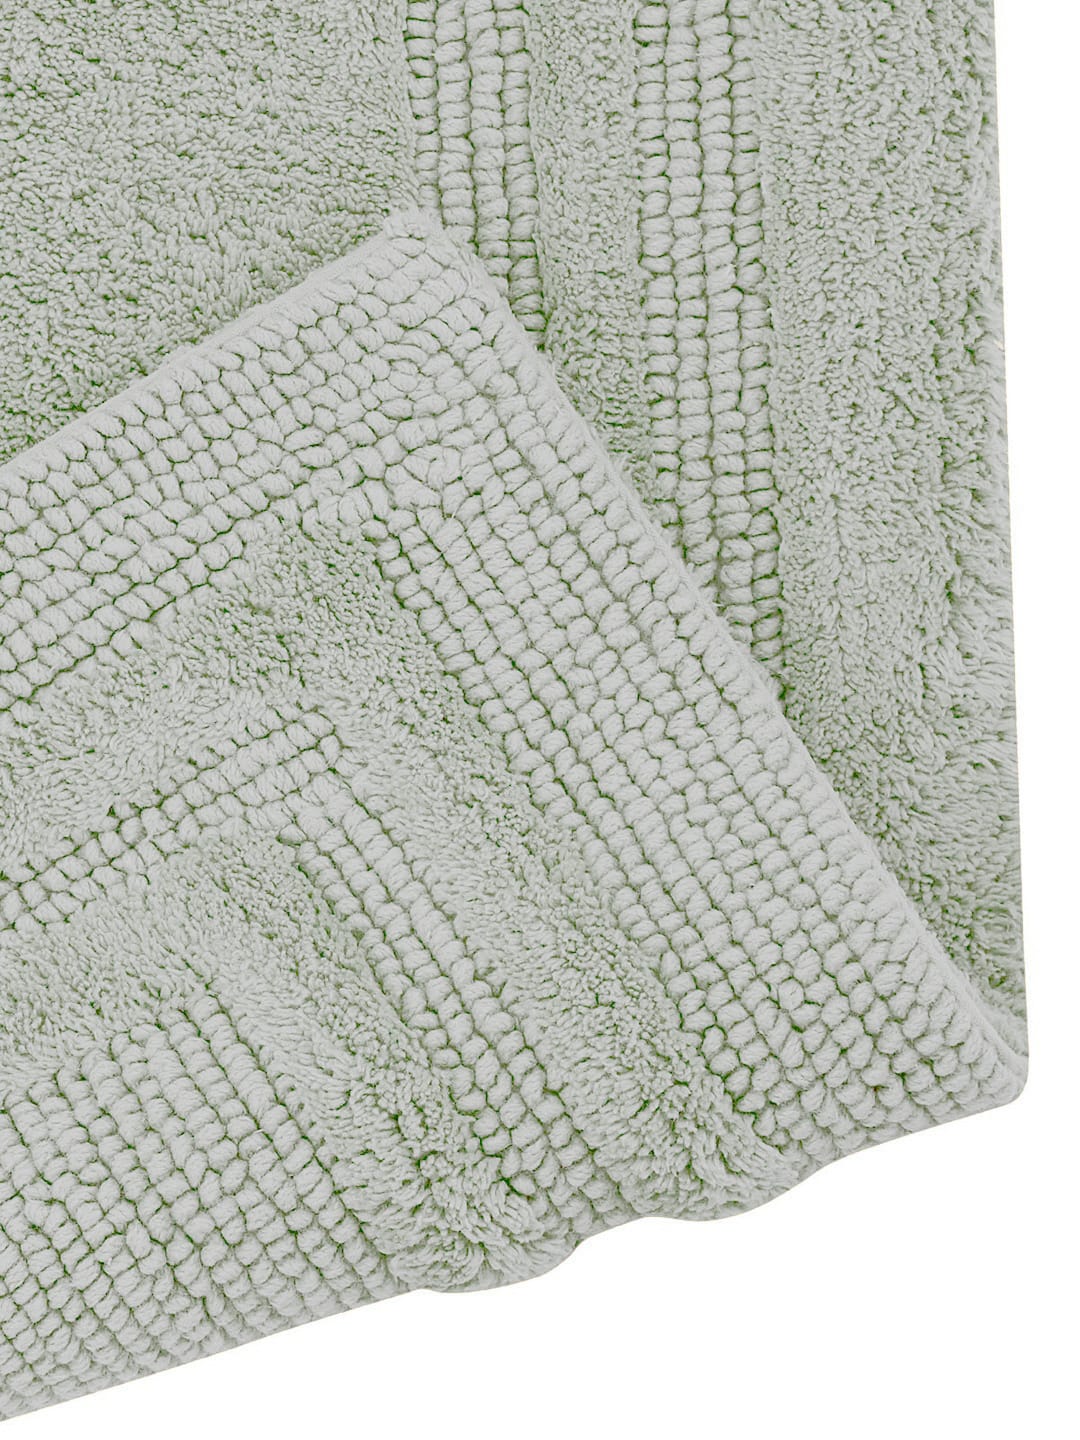 Non Slip Luxury Reversible Cotton Bathmat In Pista Online At Best Prices